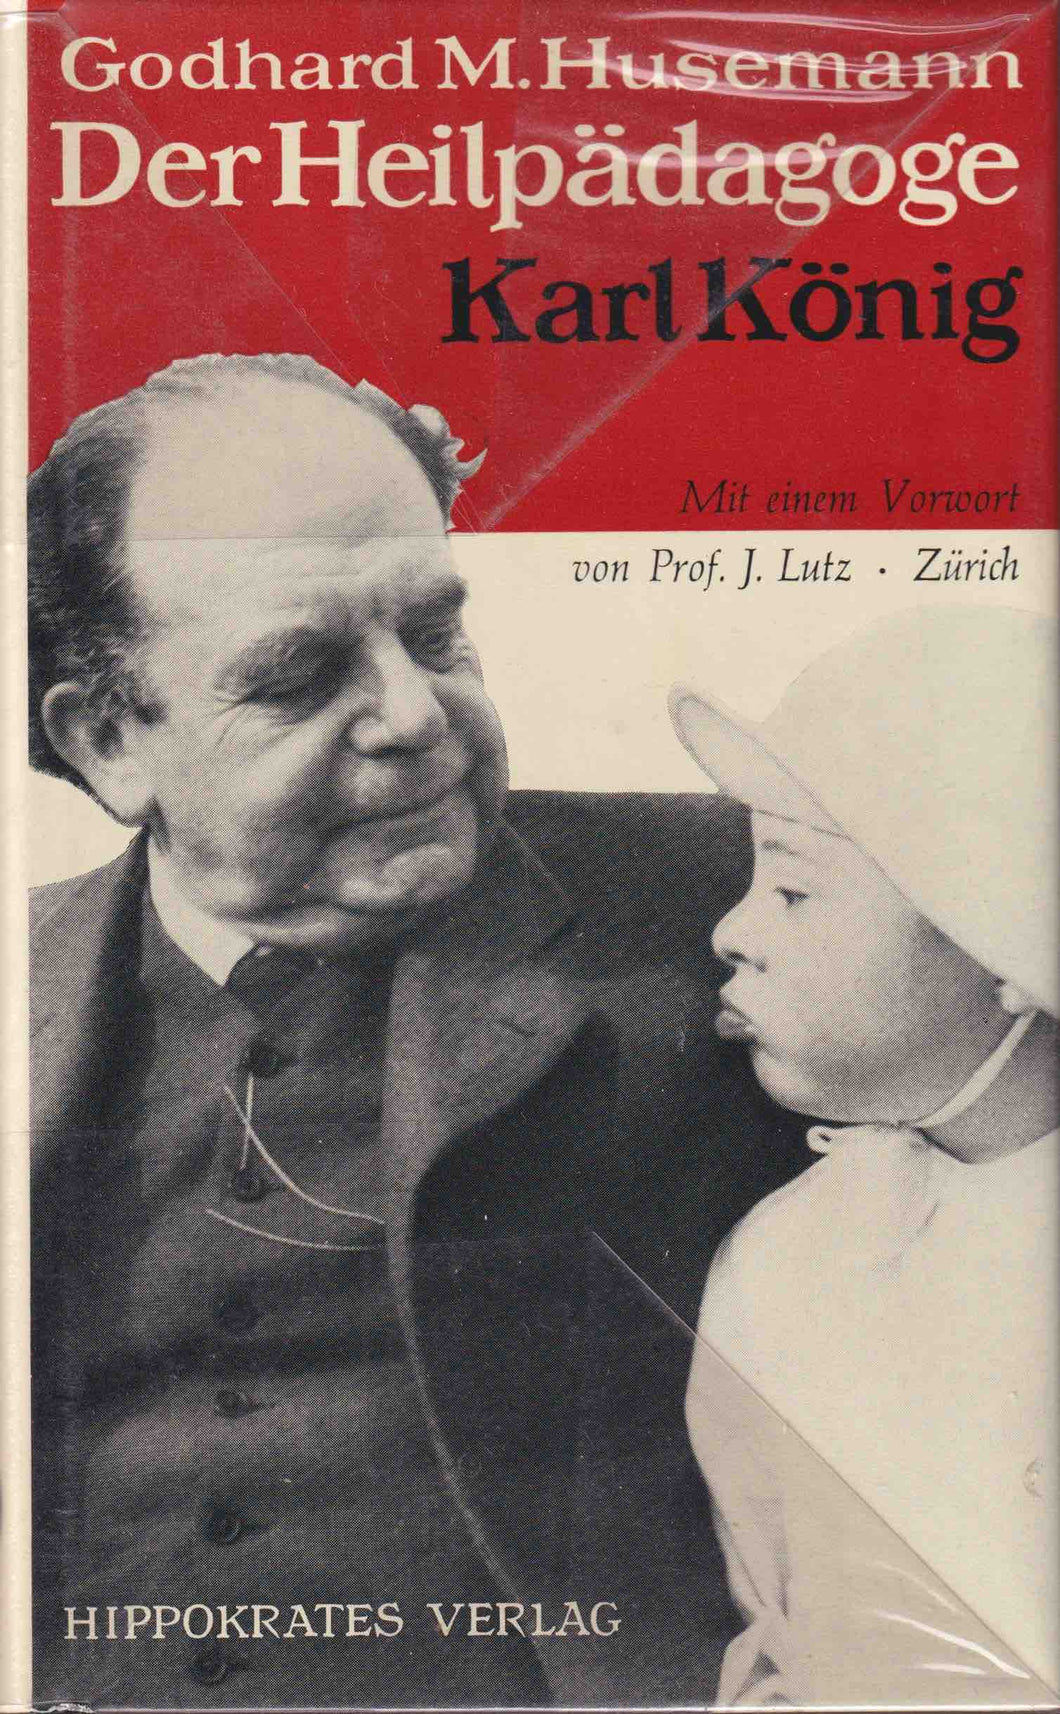 Der Heilpädagoge Karl König